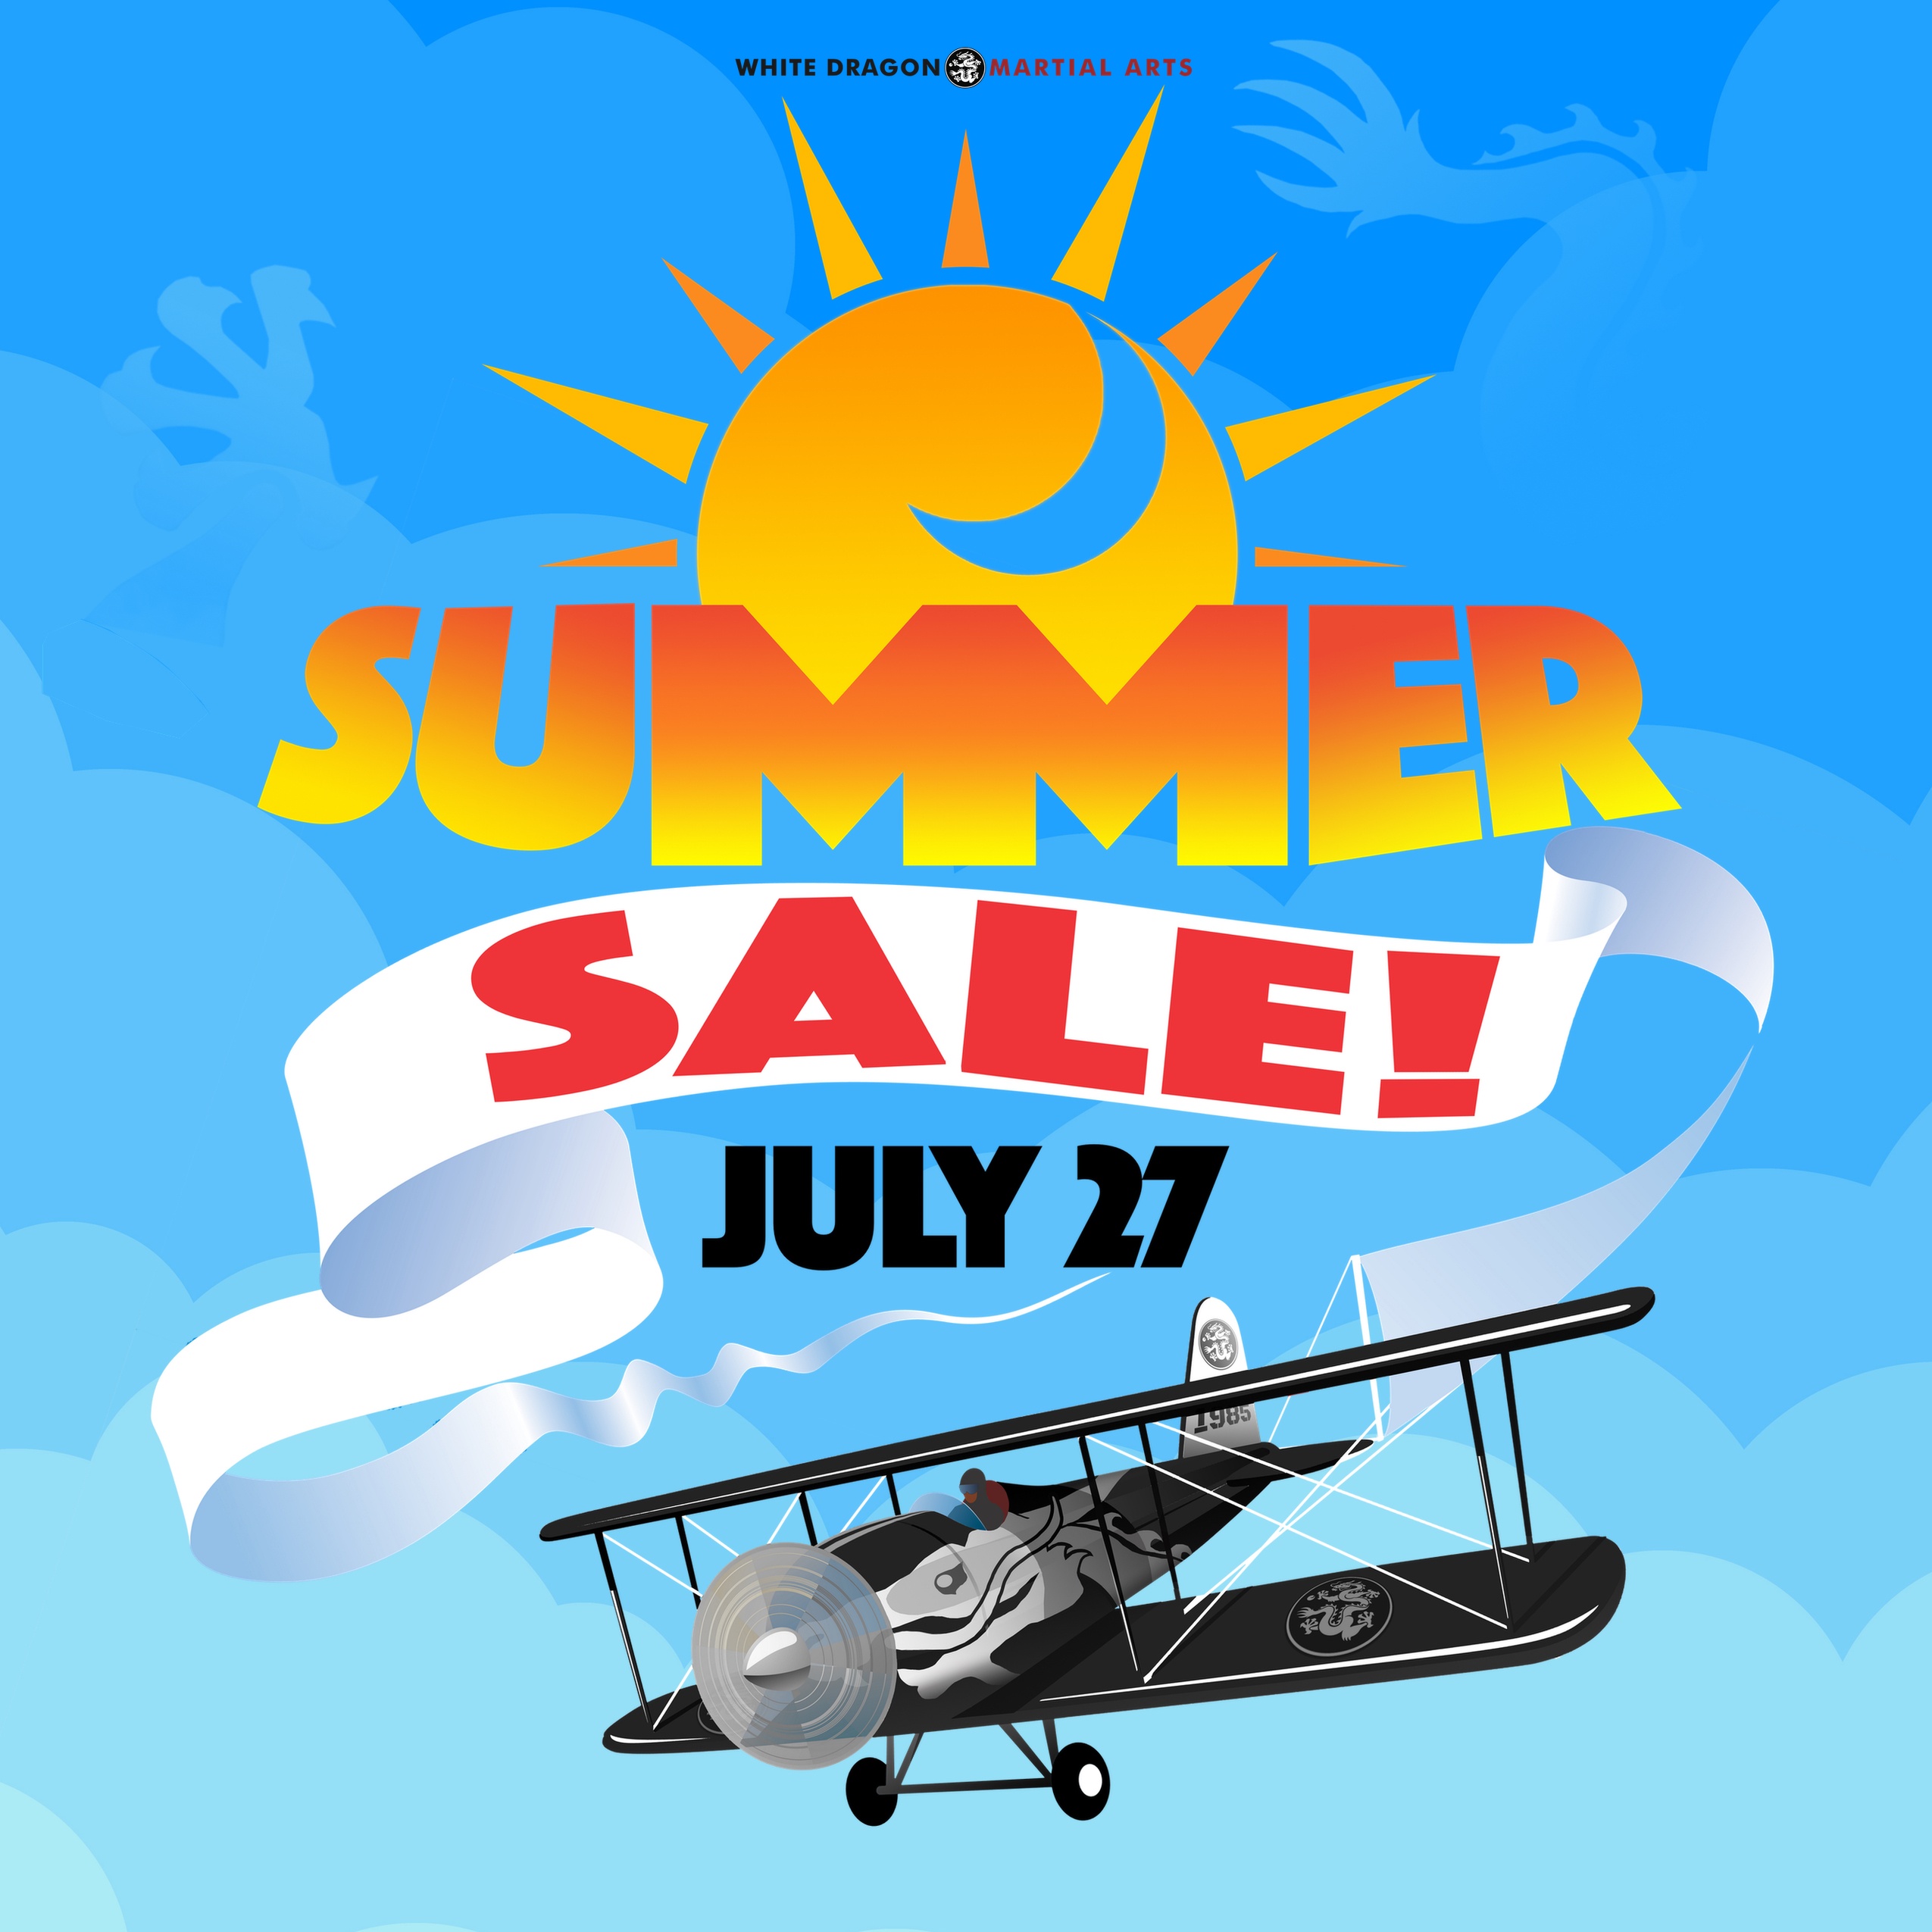 White Dragon's Annual Summer Sale